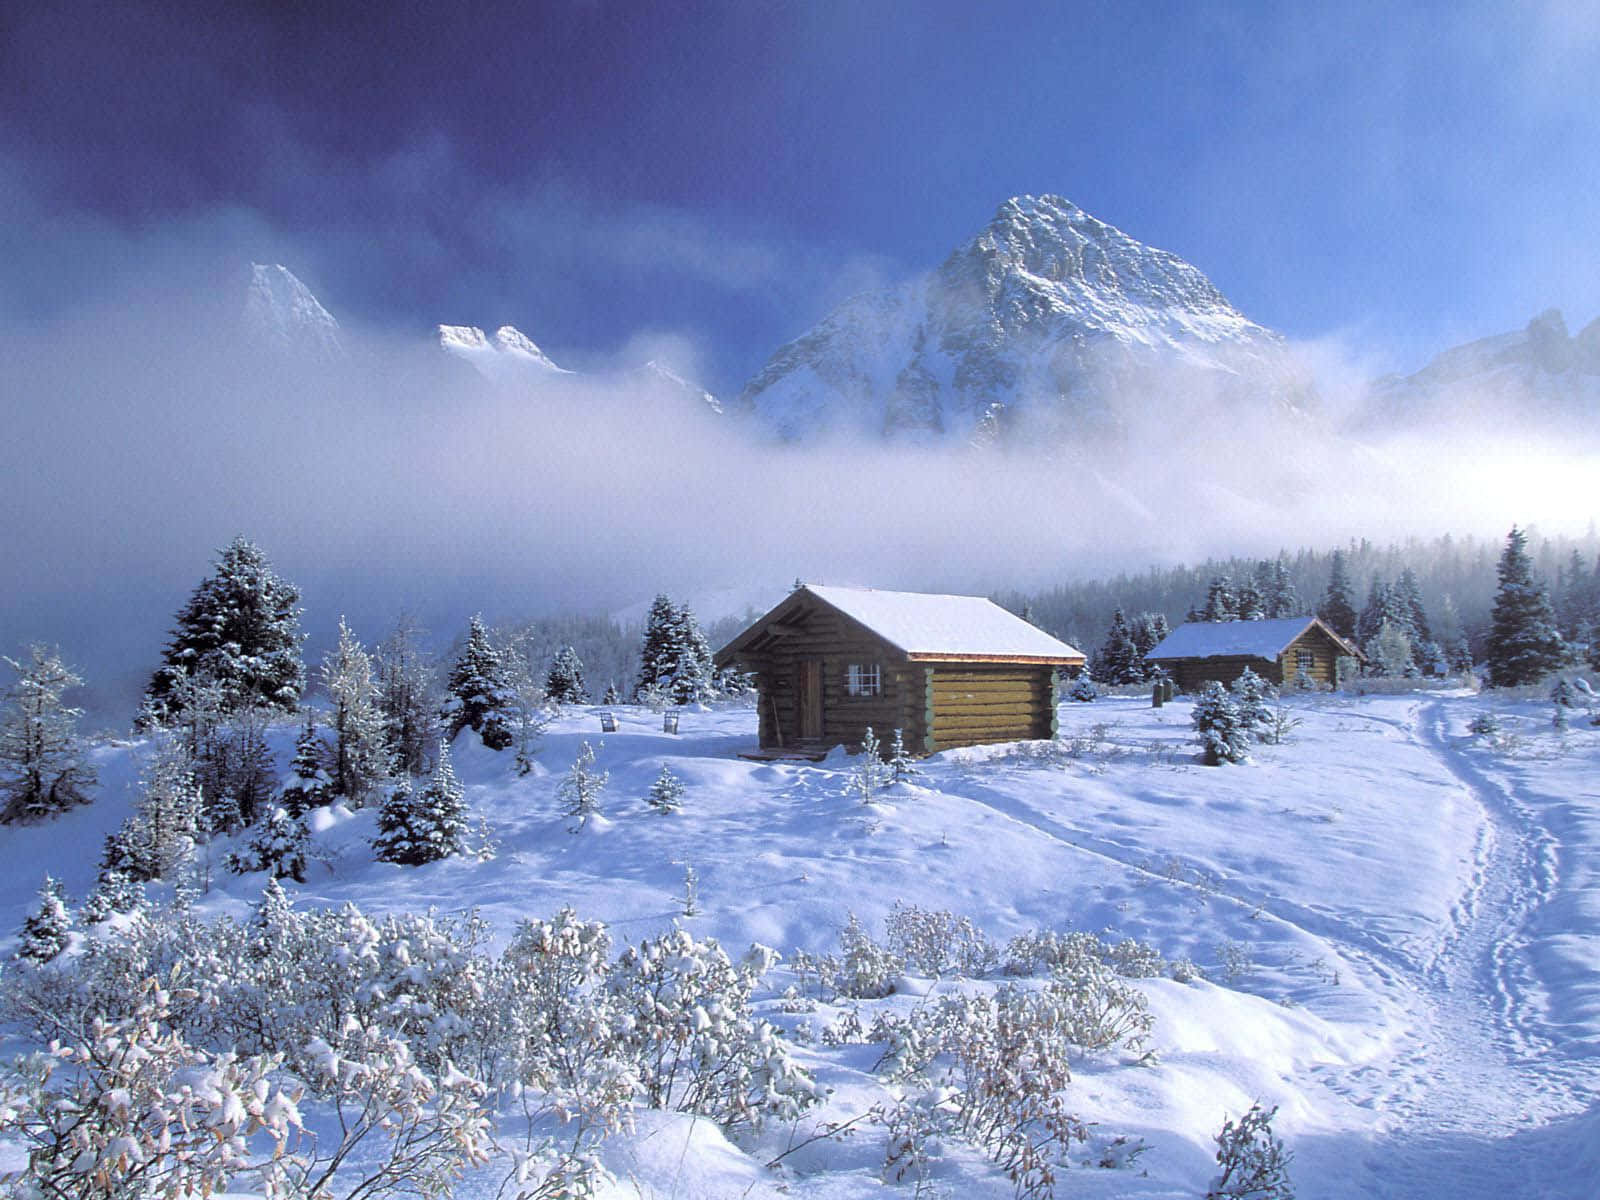 An Immersive Winter Snow Landscape.